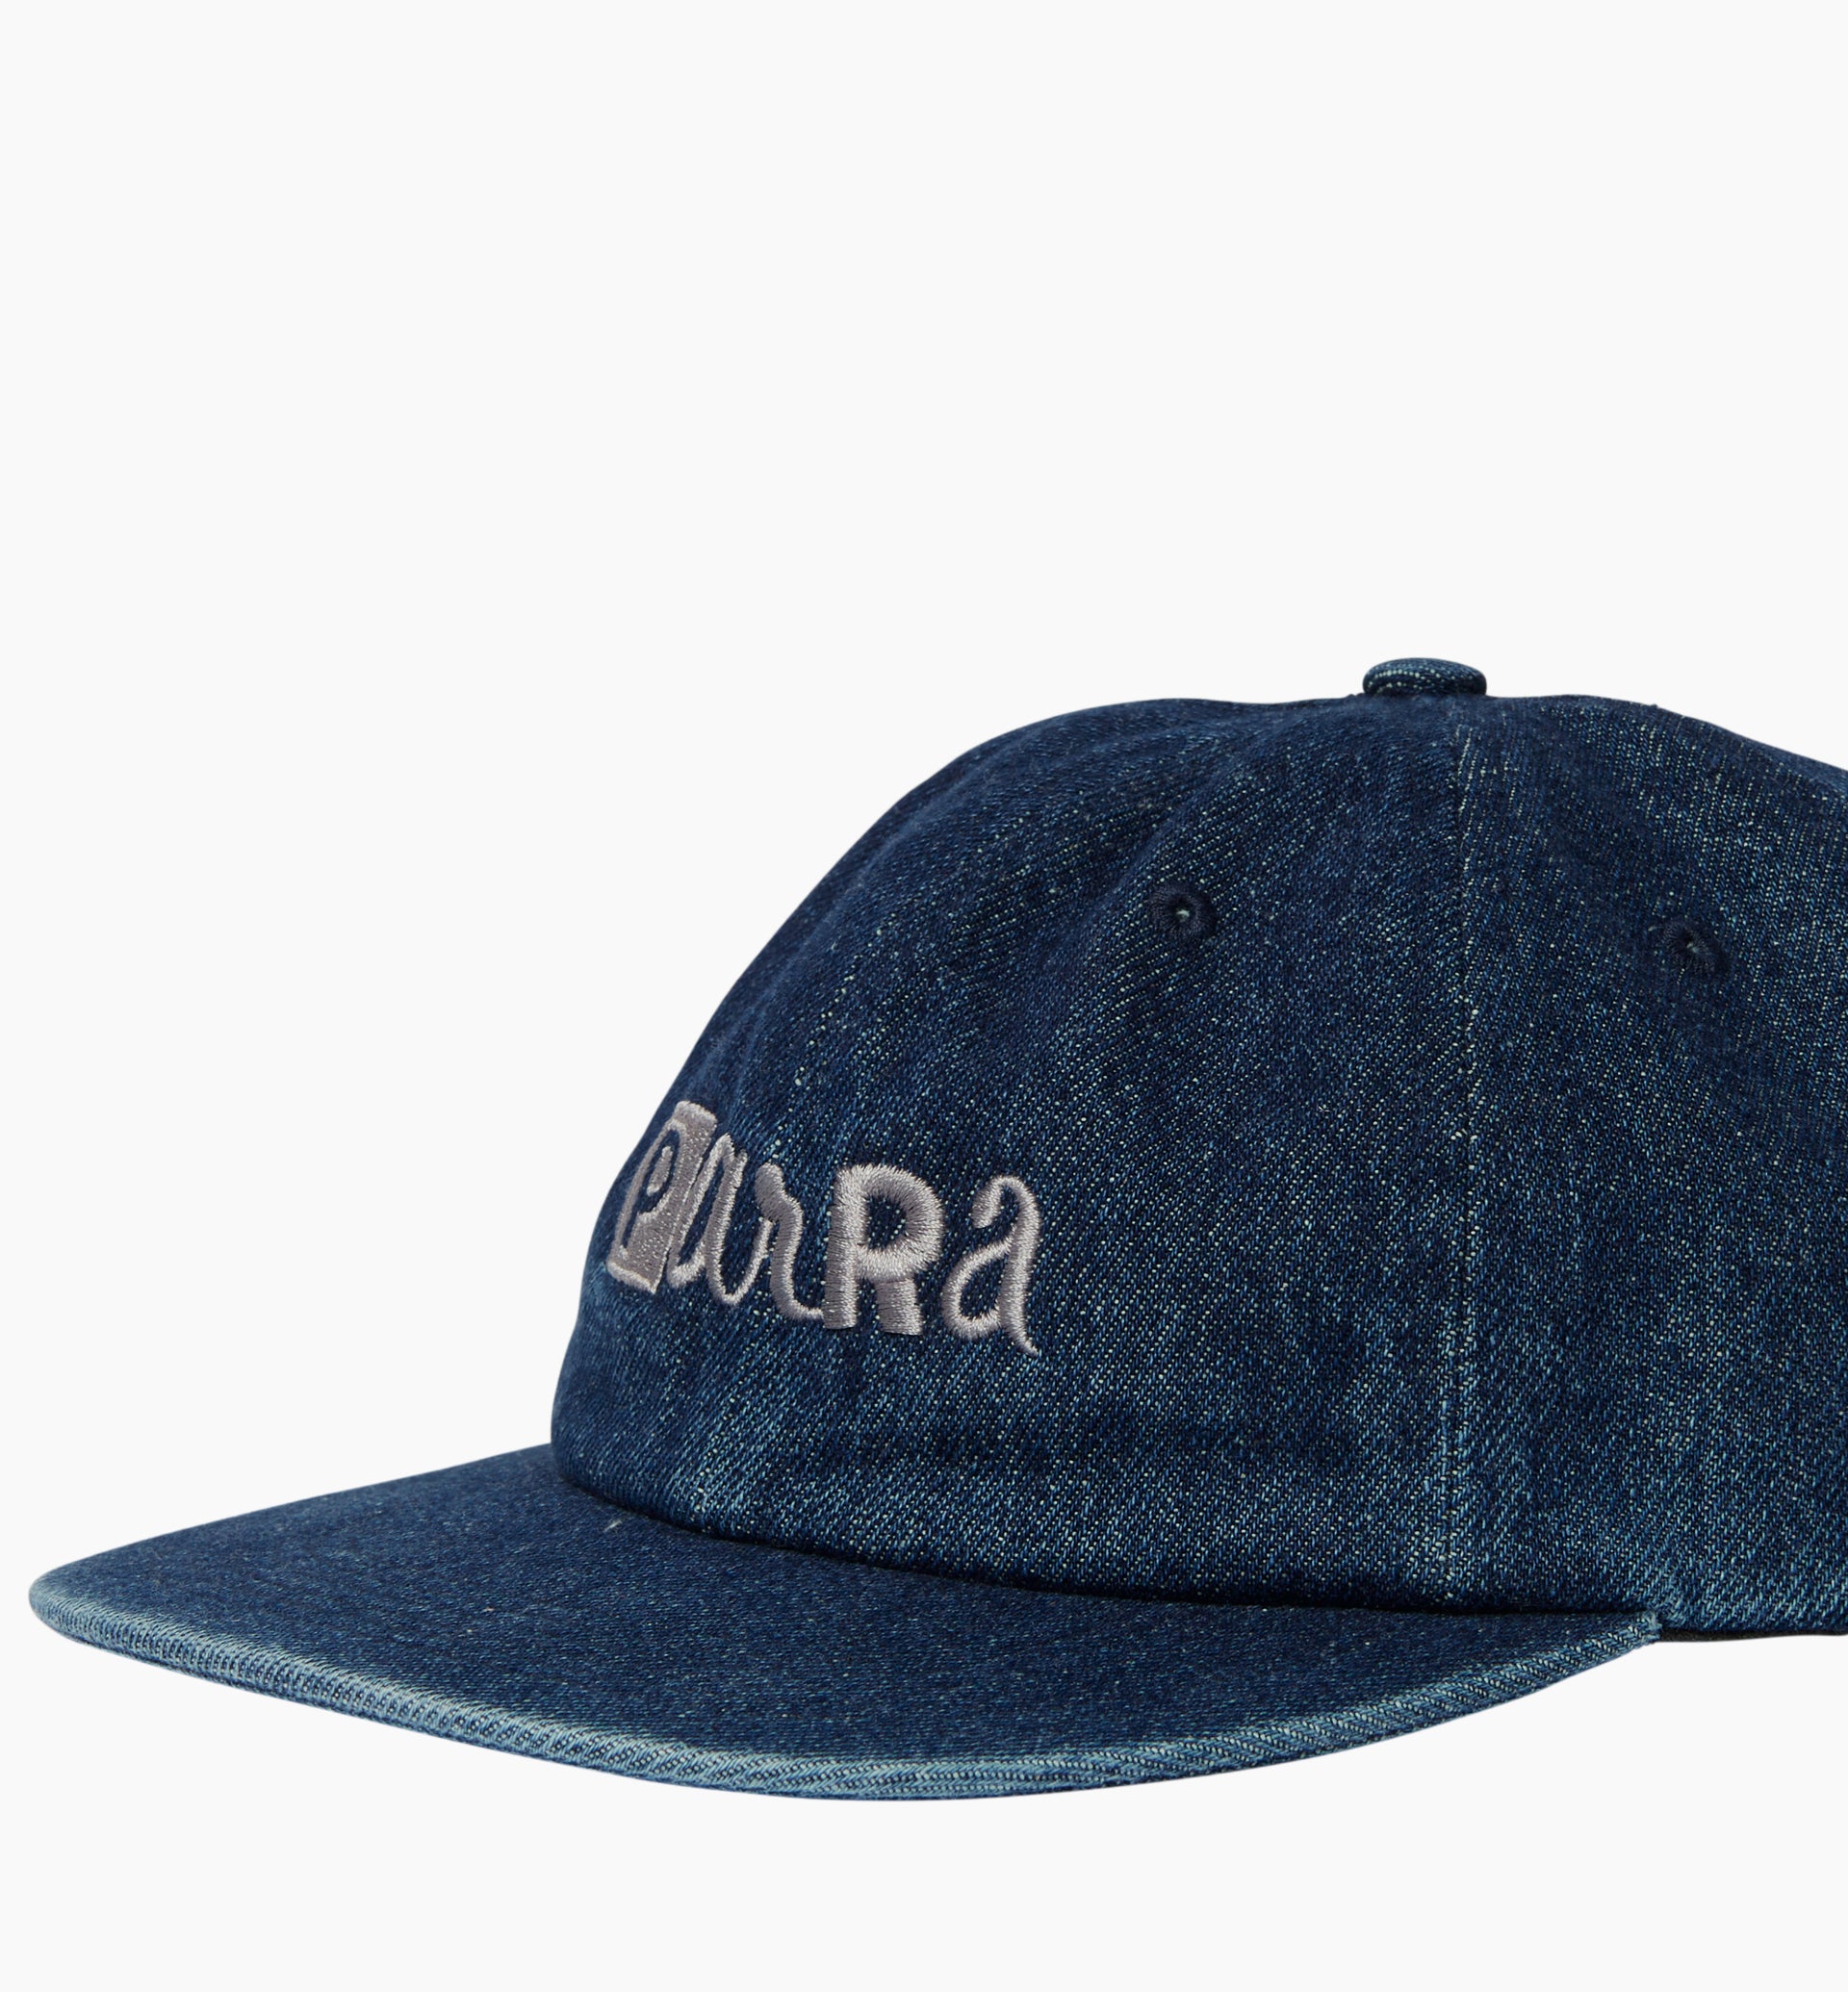 Parra - blocked logo 6 panel hat